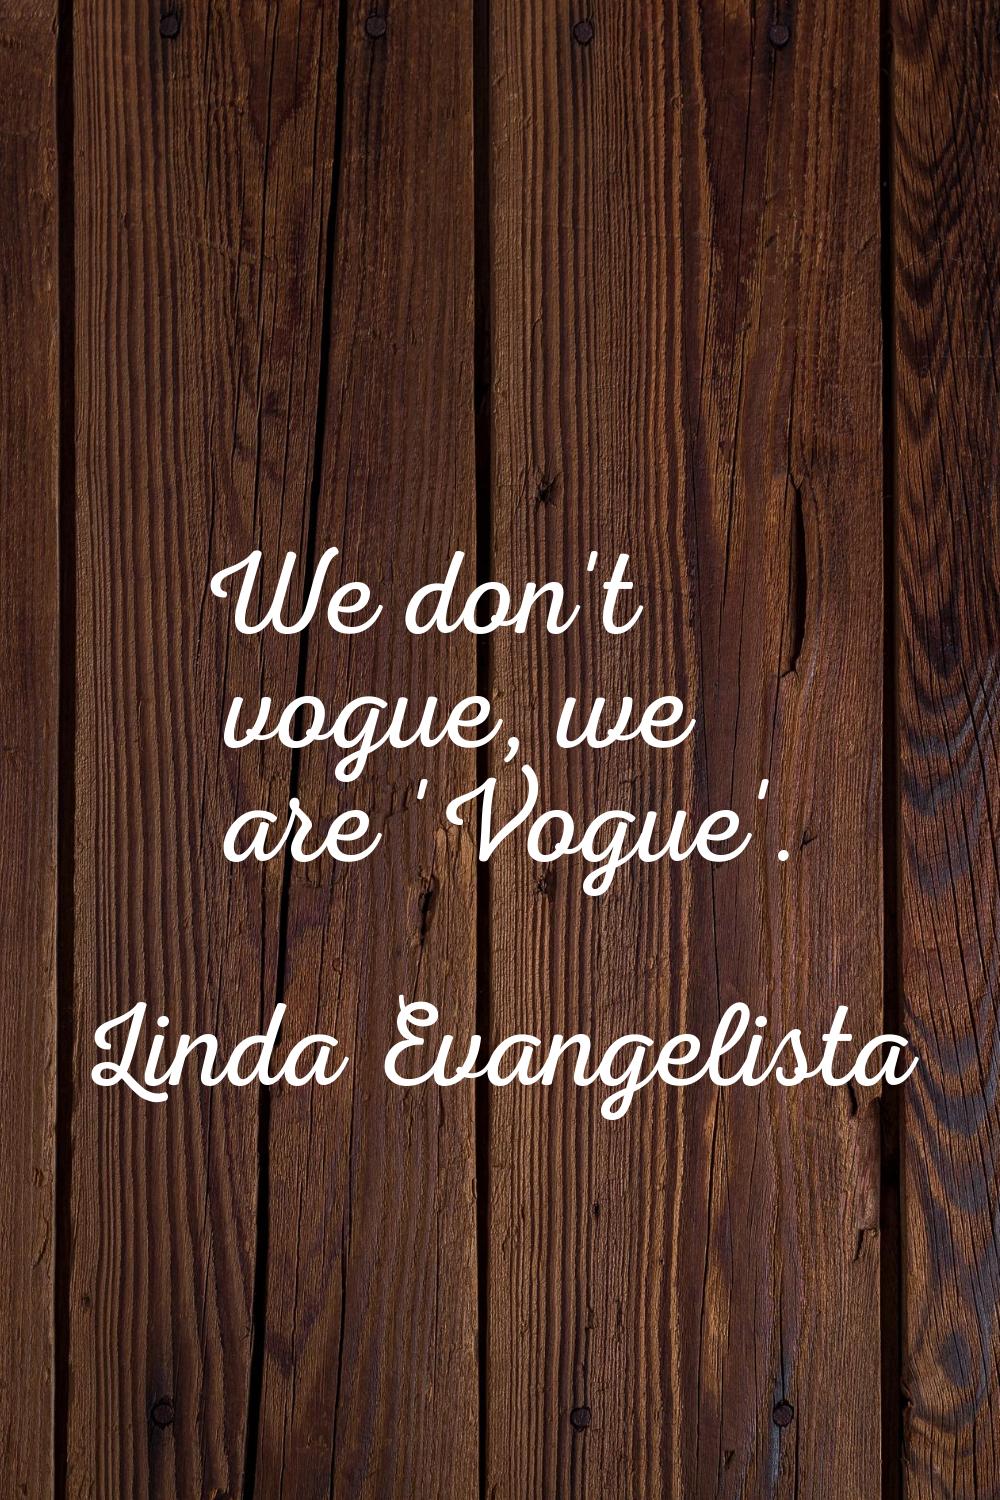 We don't vogue, we are 'Vogue'.